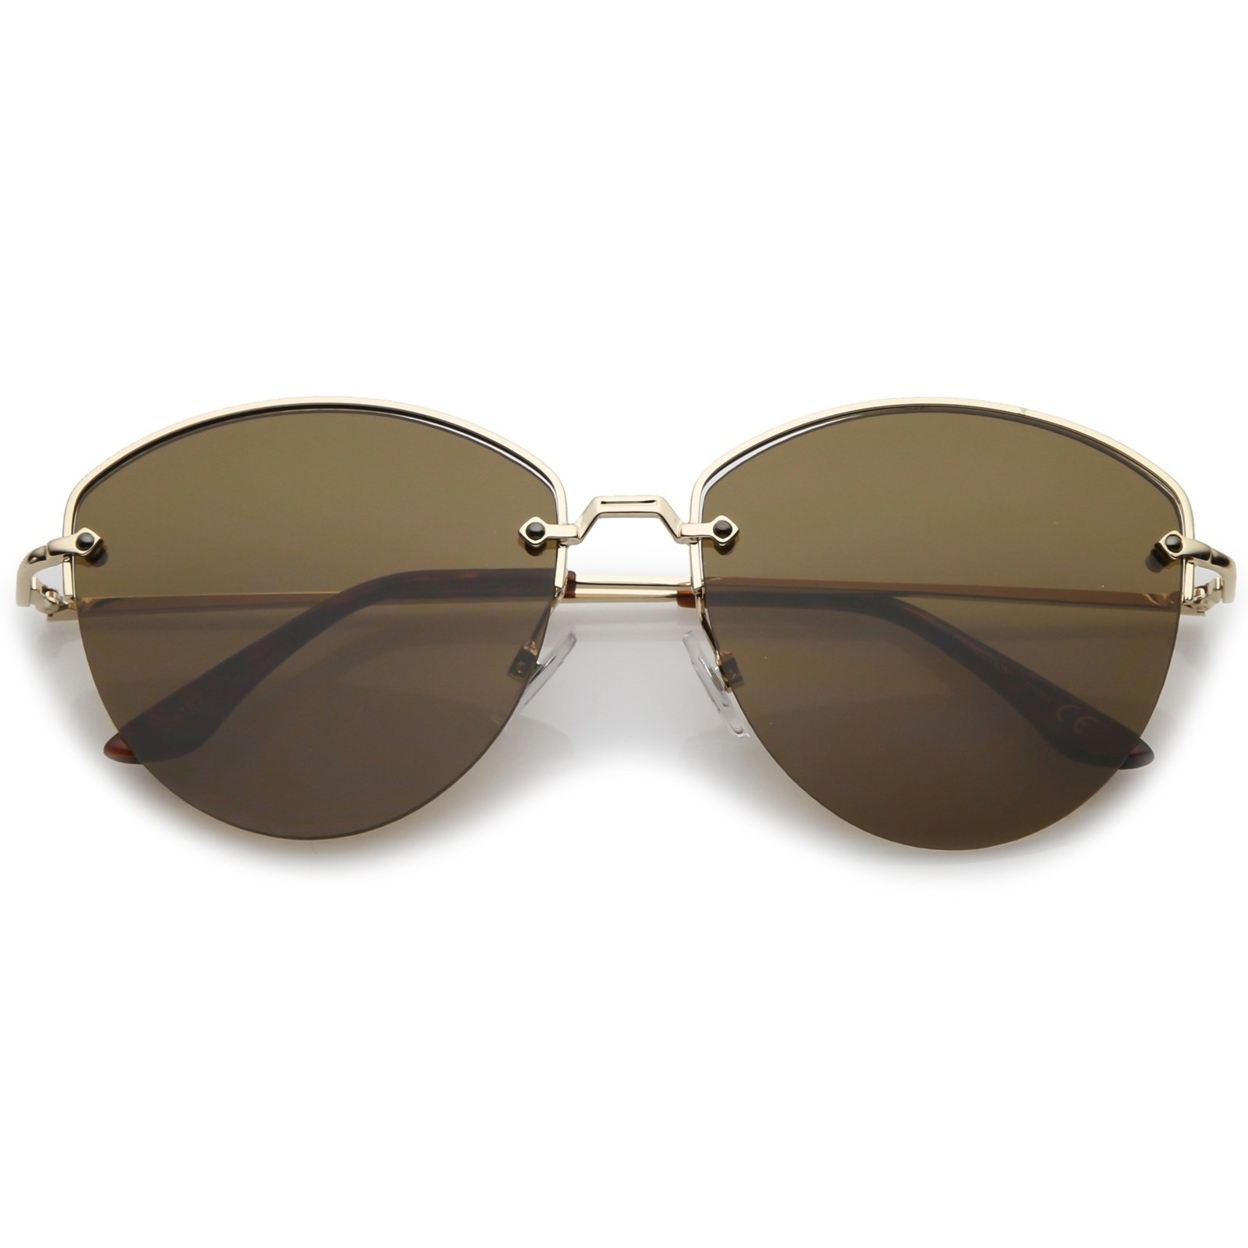 Modern Metal Nose Bridge Flat Lens Semi-Rimless Sunglasses 60mm - Gold / Brown